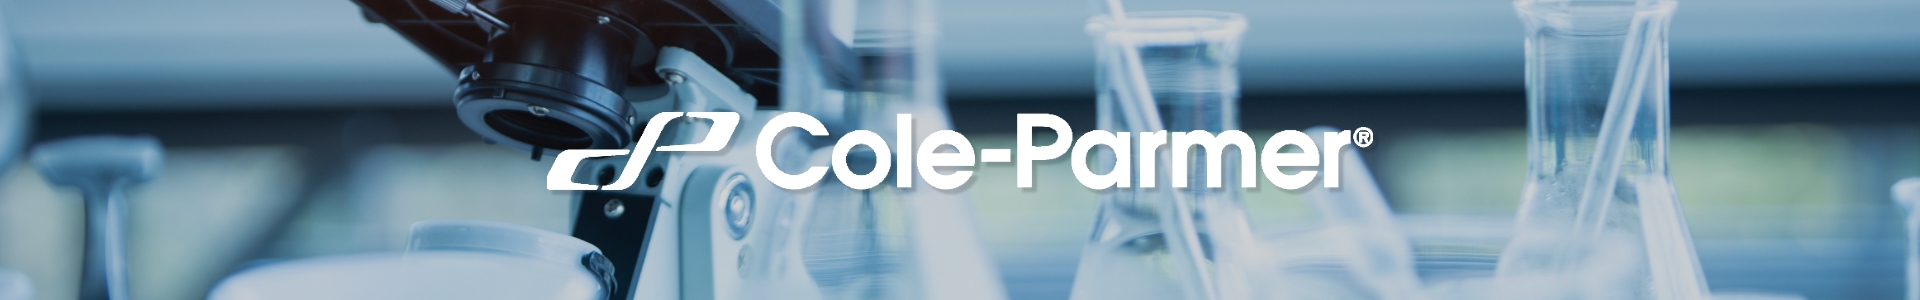 Cole Parmer brand - COLE-PARMER